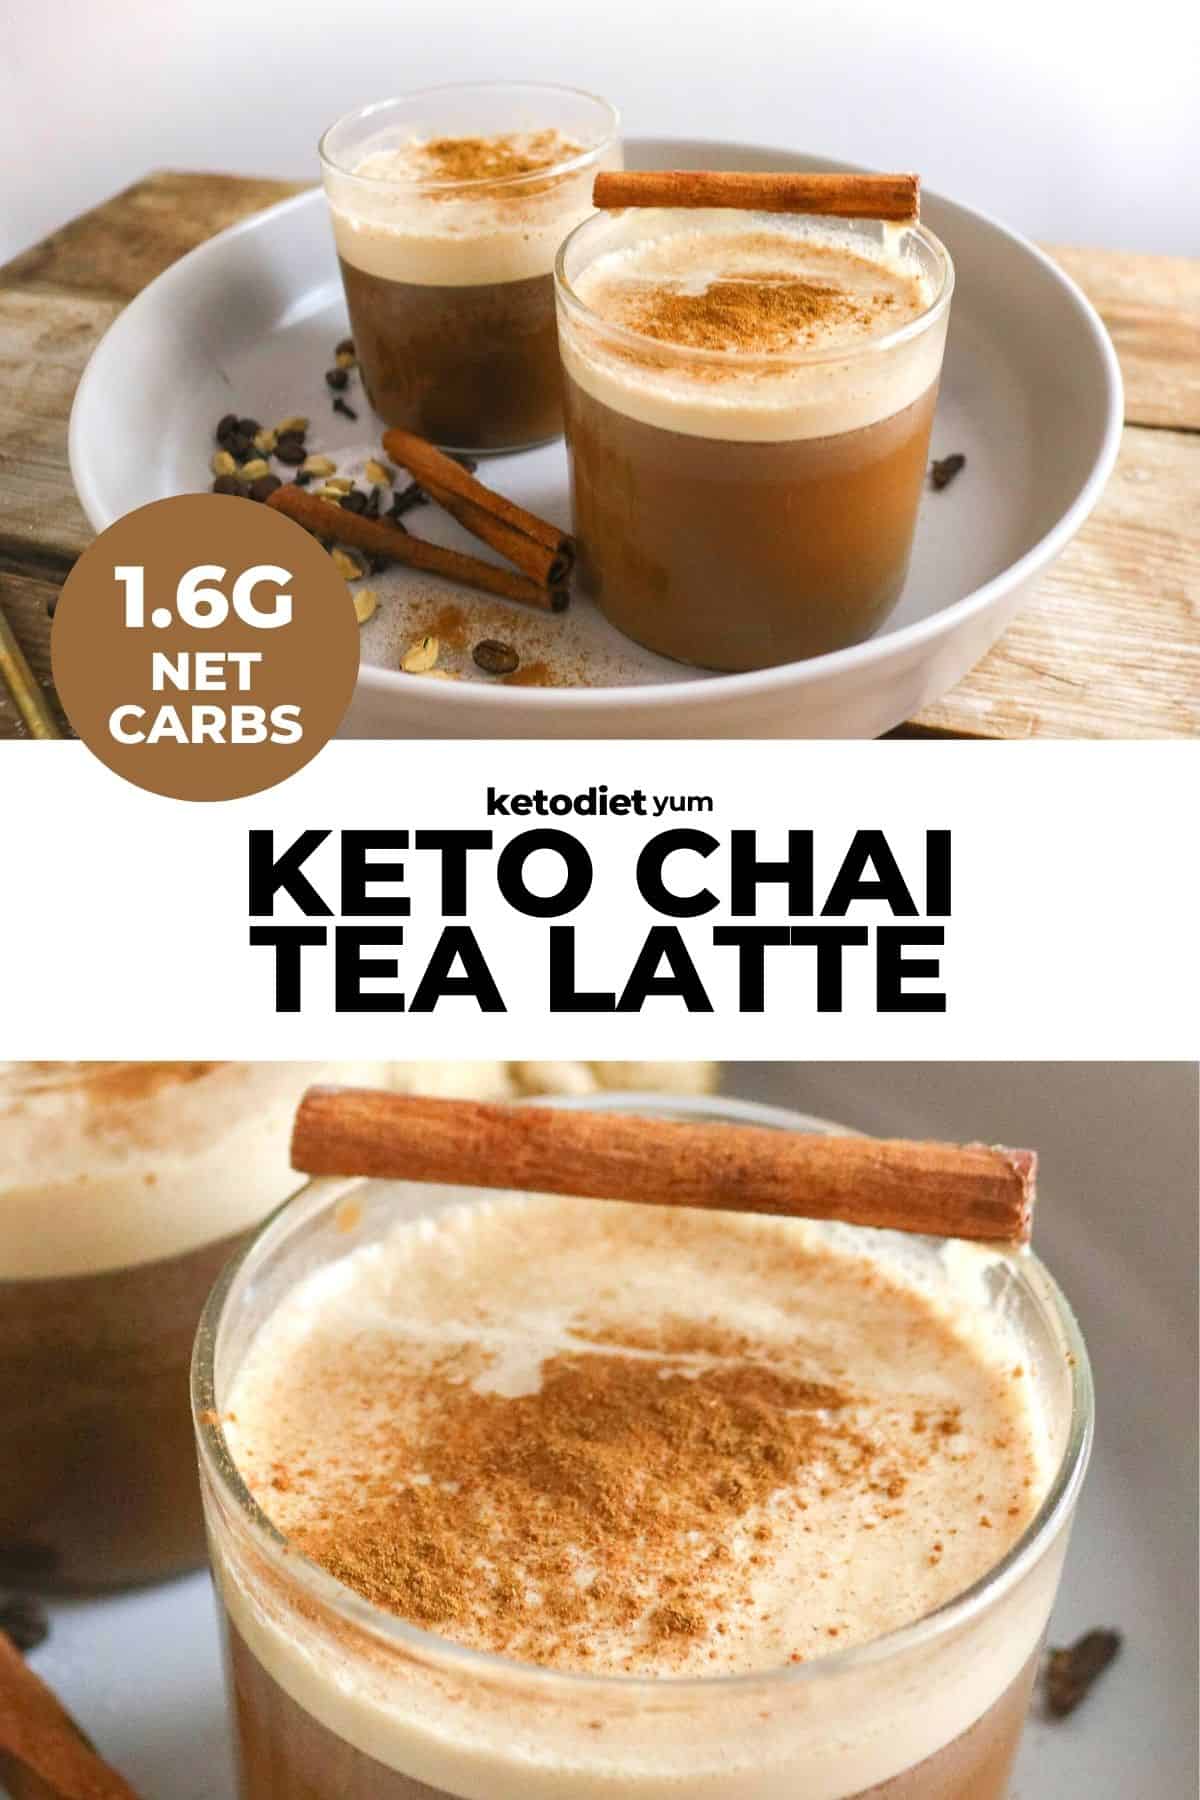 Best-Keto-Chai-Tea-Latte-Recipe